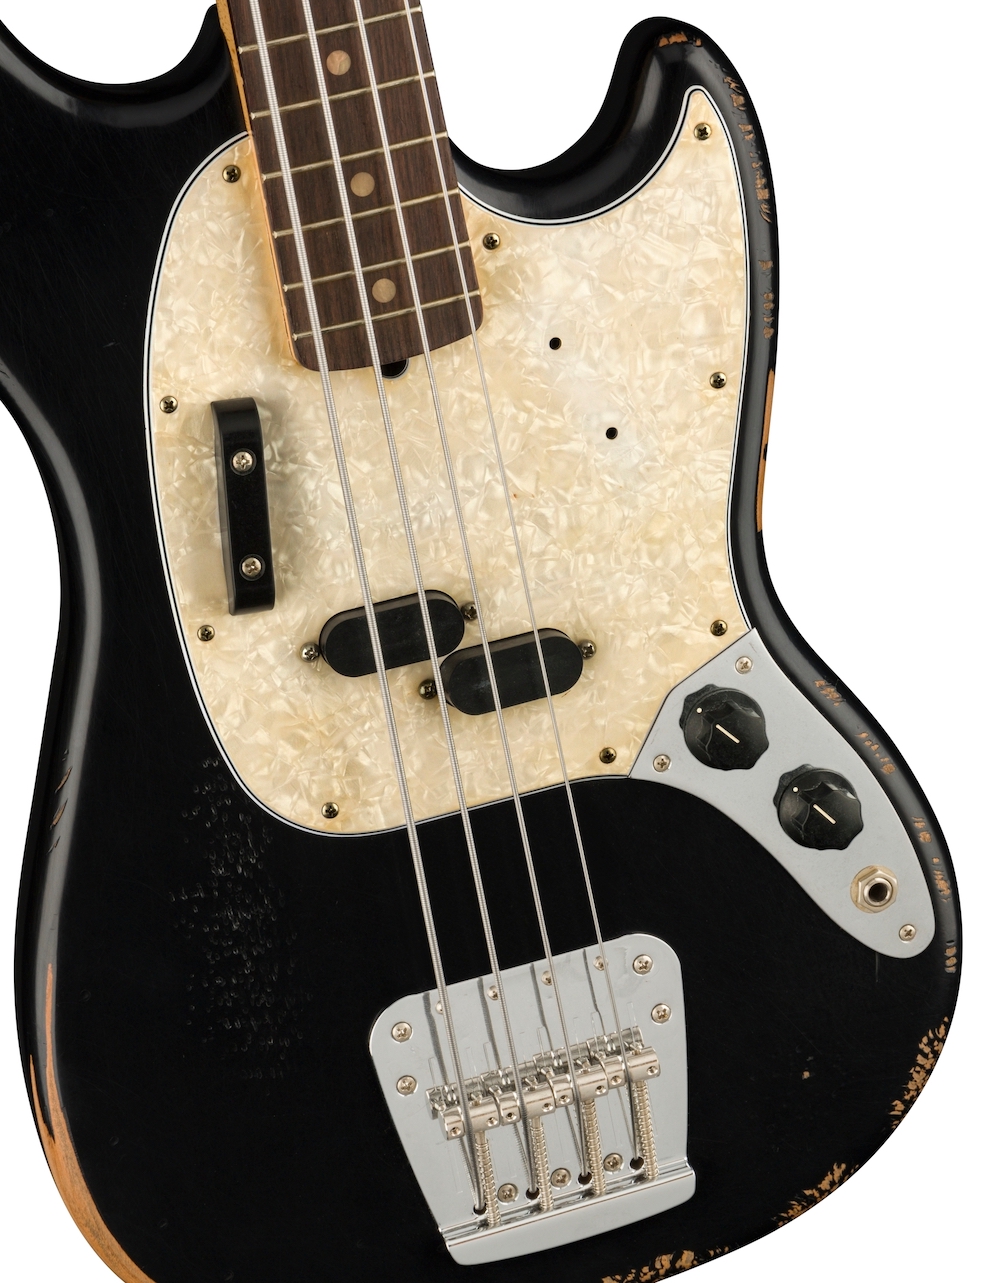 Fender mustang bass jmj road worn